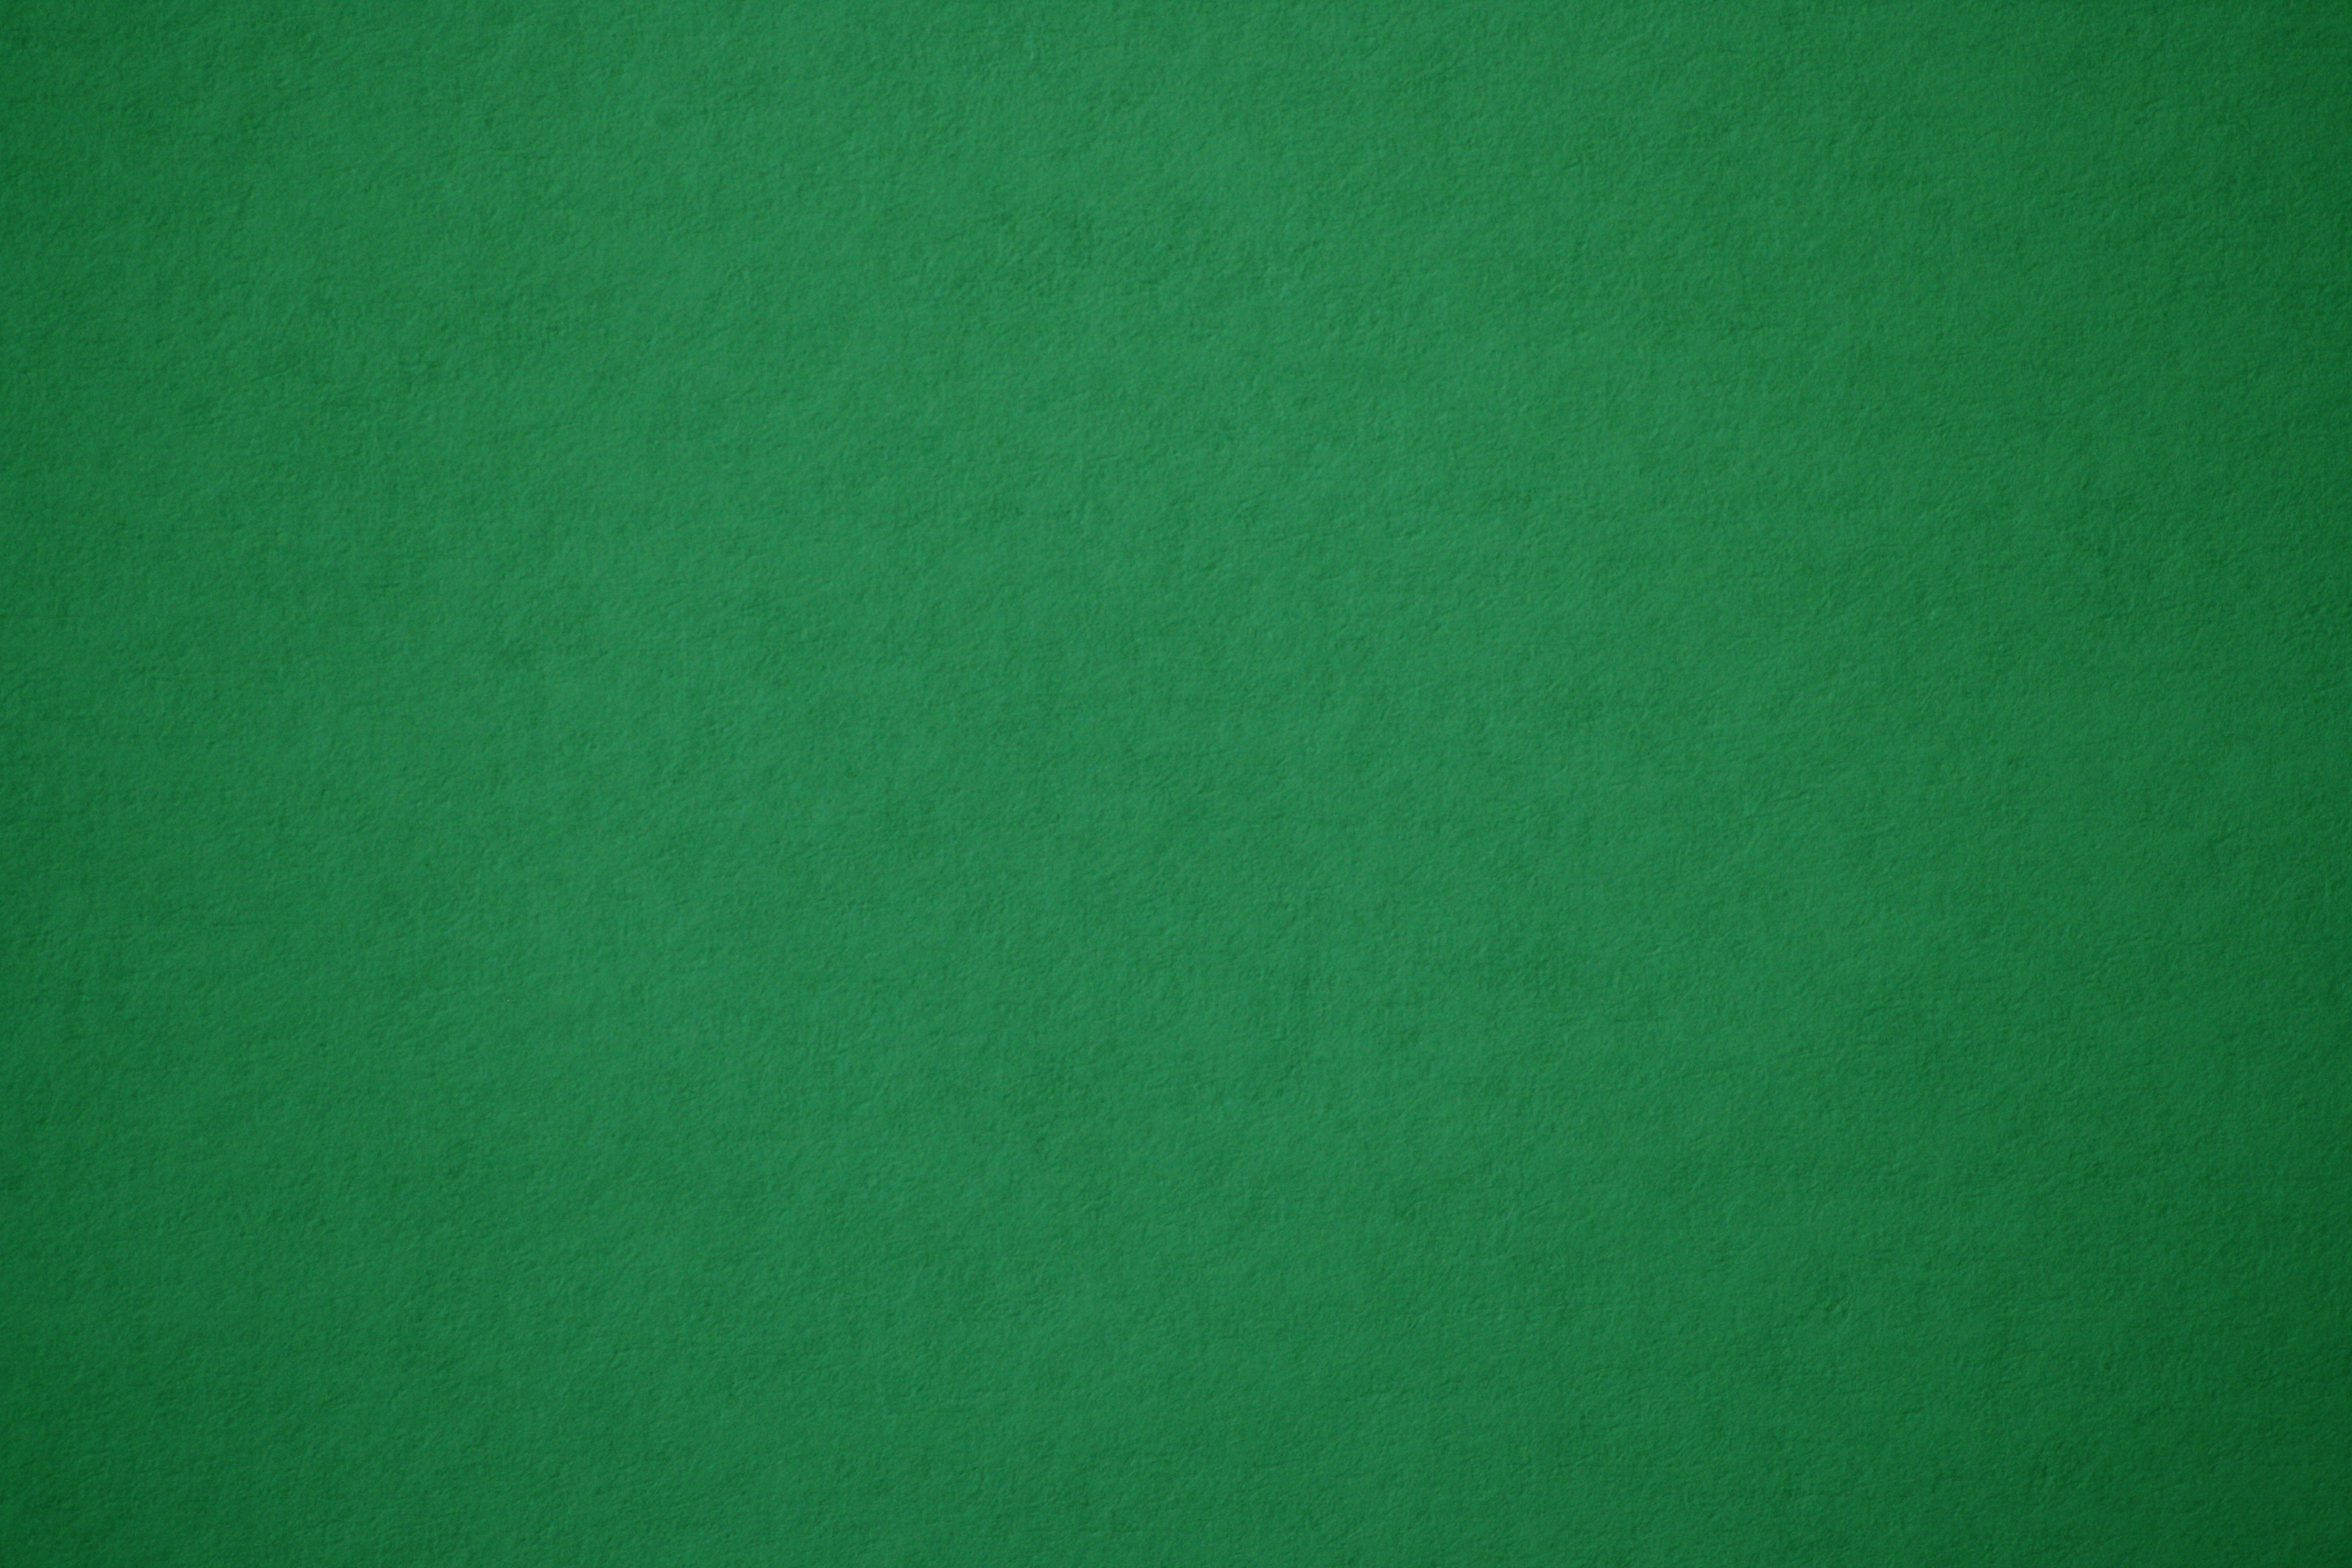 Green Paper Texture Picture | Free Photograph | Photos Public Domain